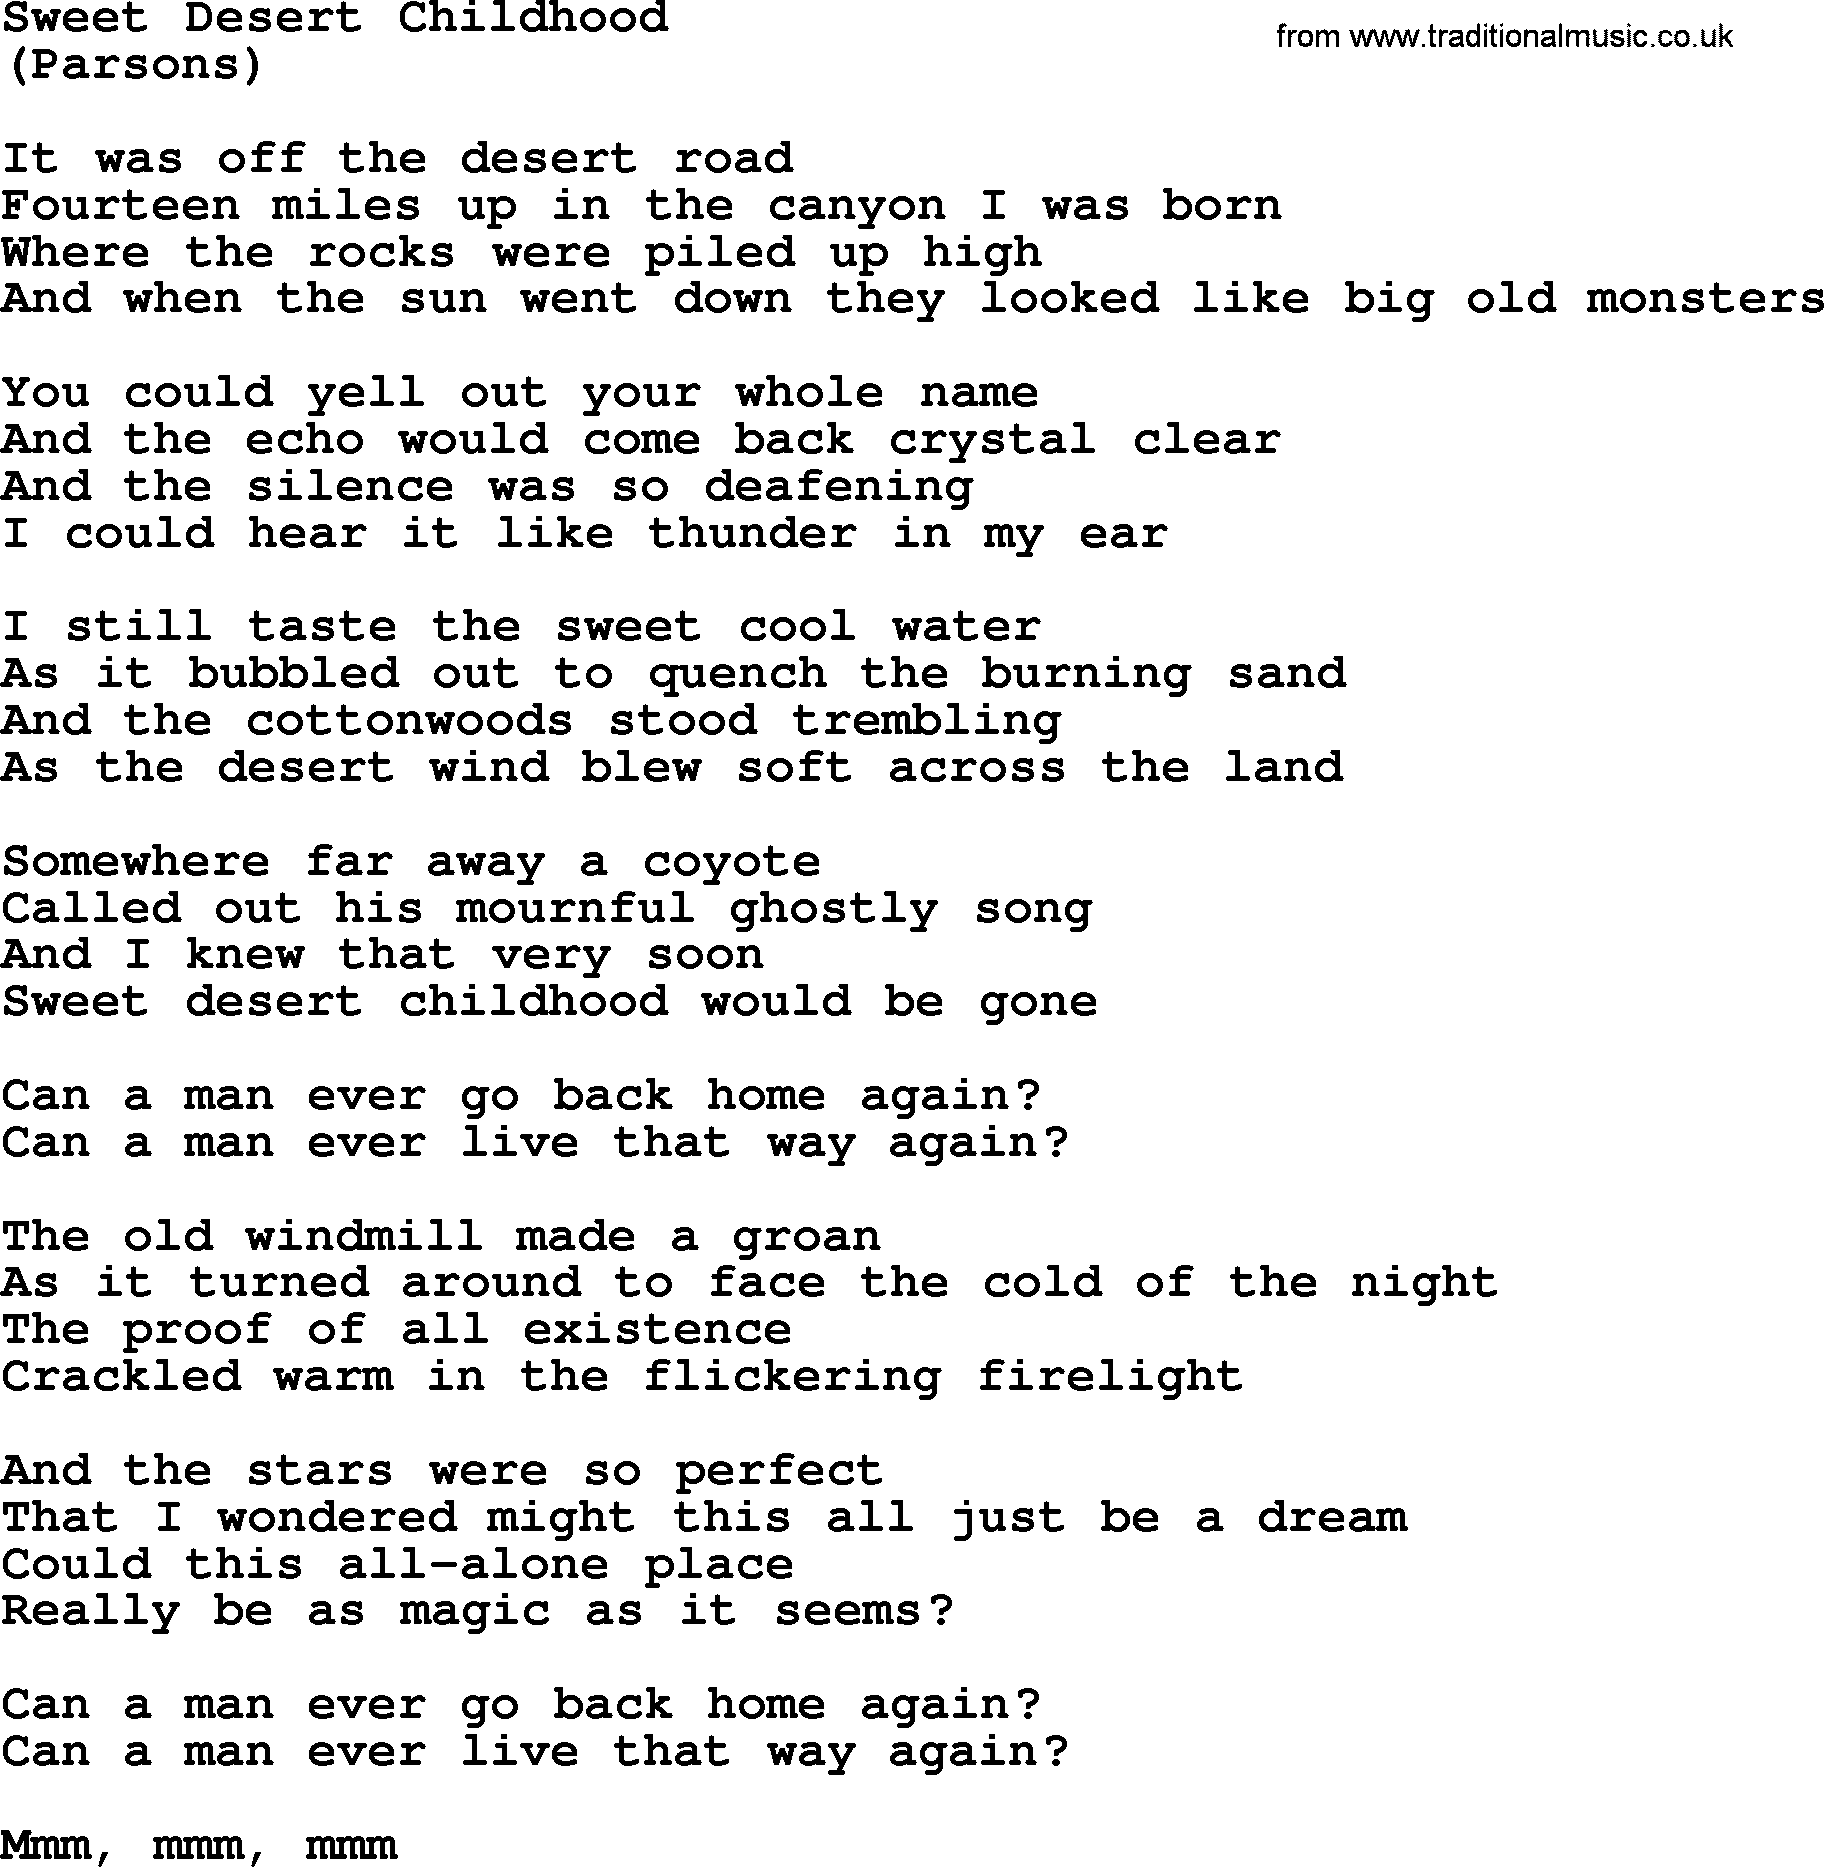 The Byrds song Sweet Desert Childhood, lyrics